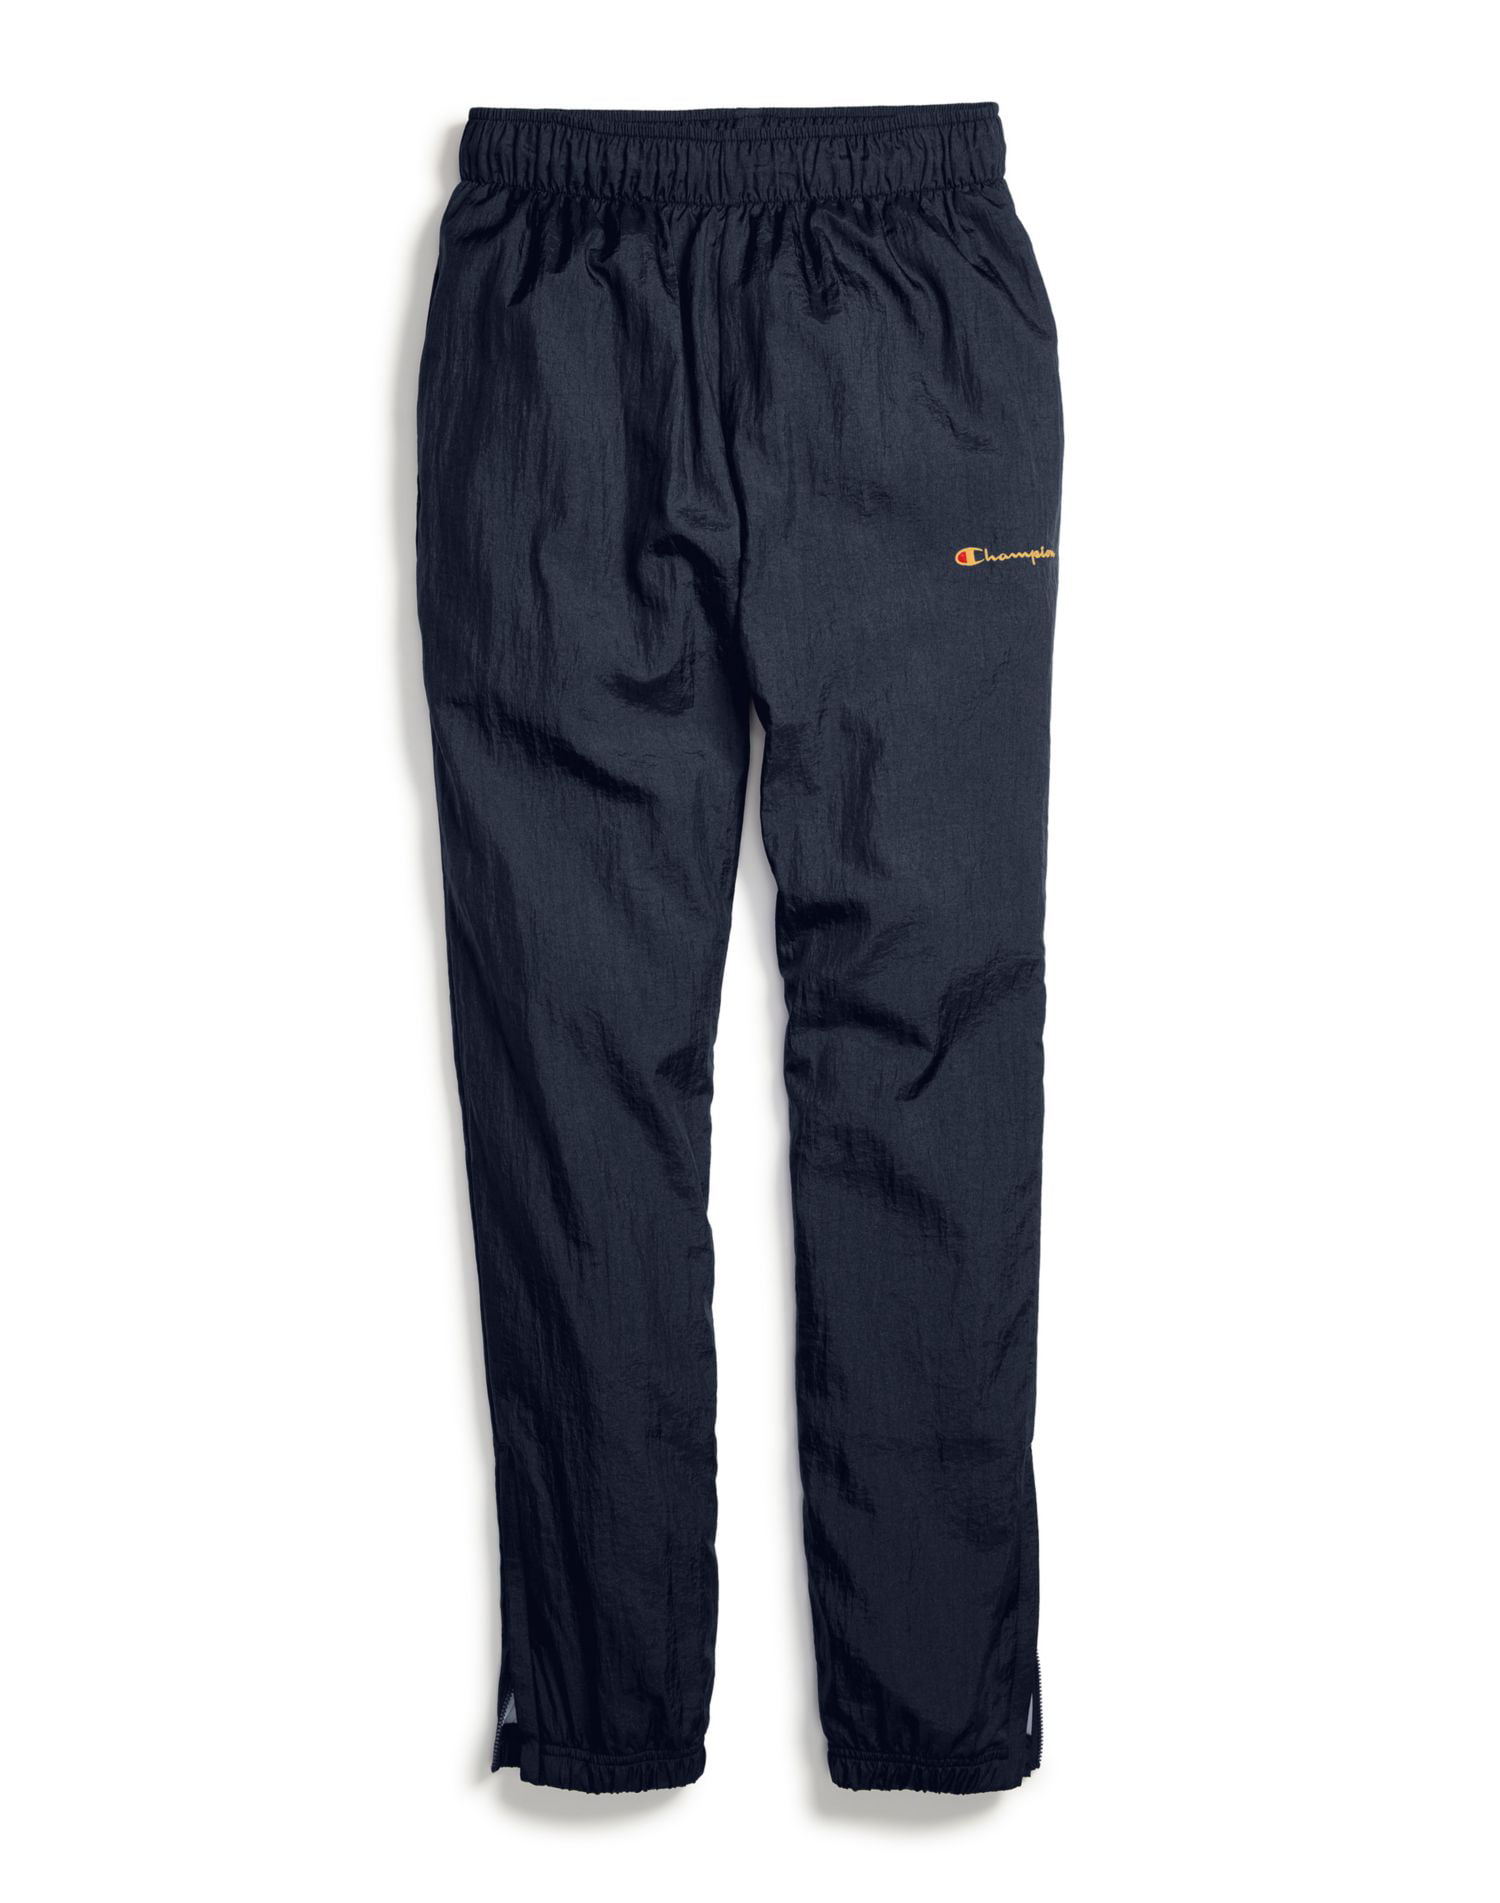 Mercedes Anchor Inc. Warm Up Pants Mサイズ-